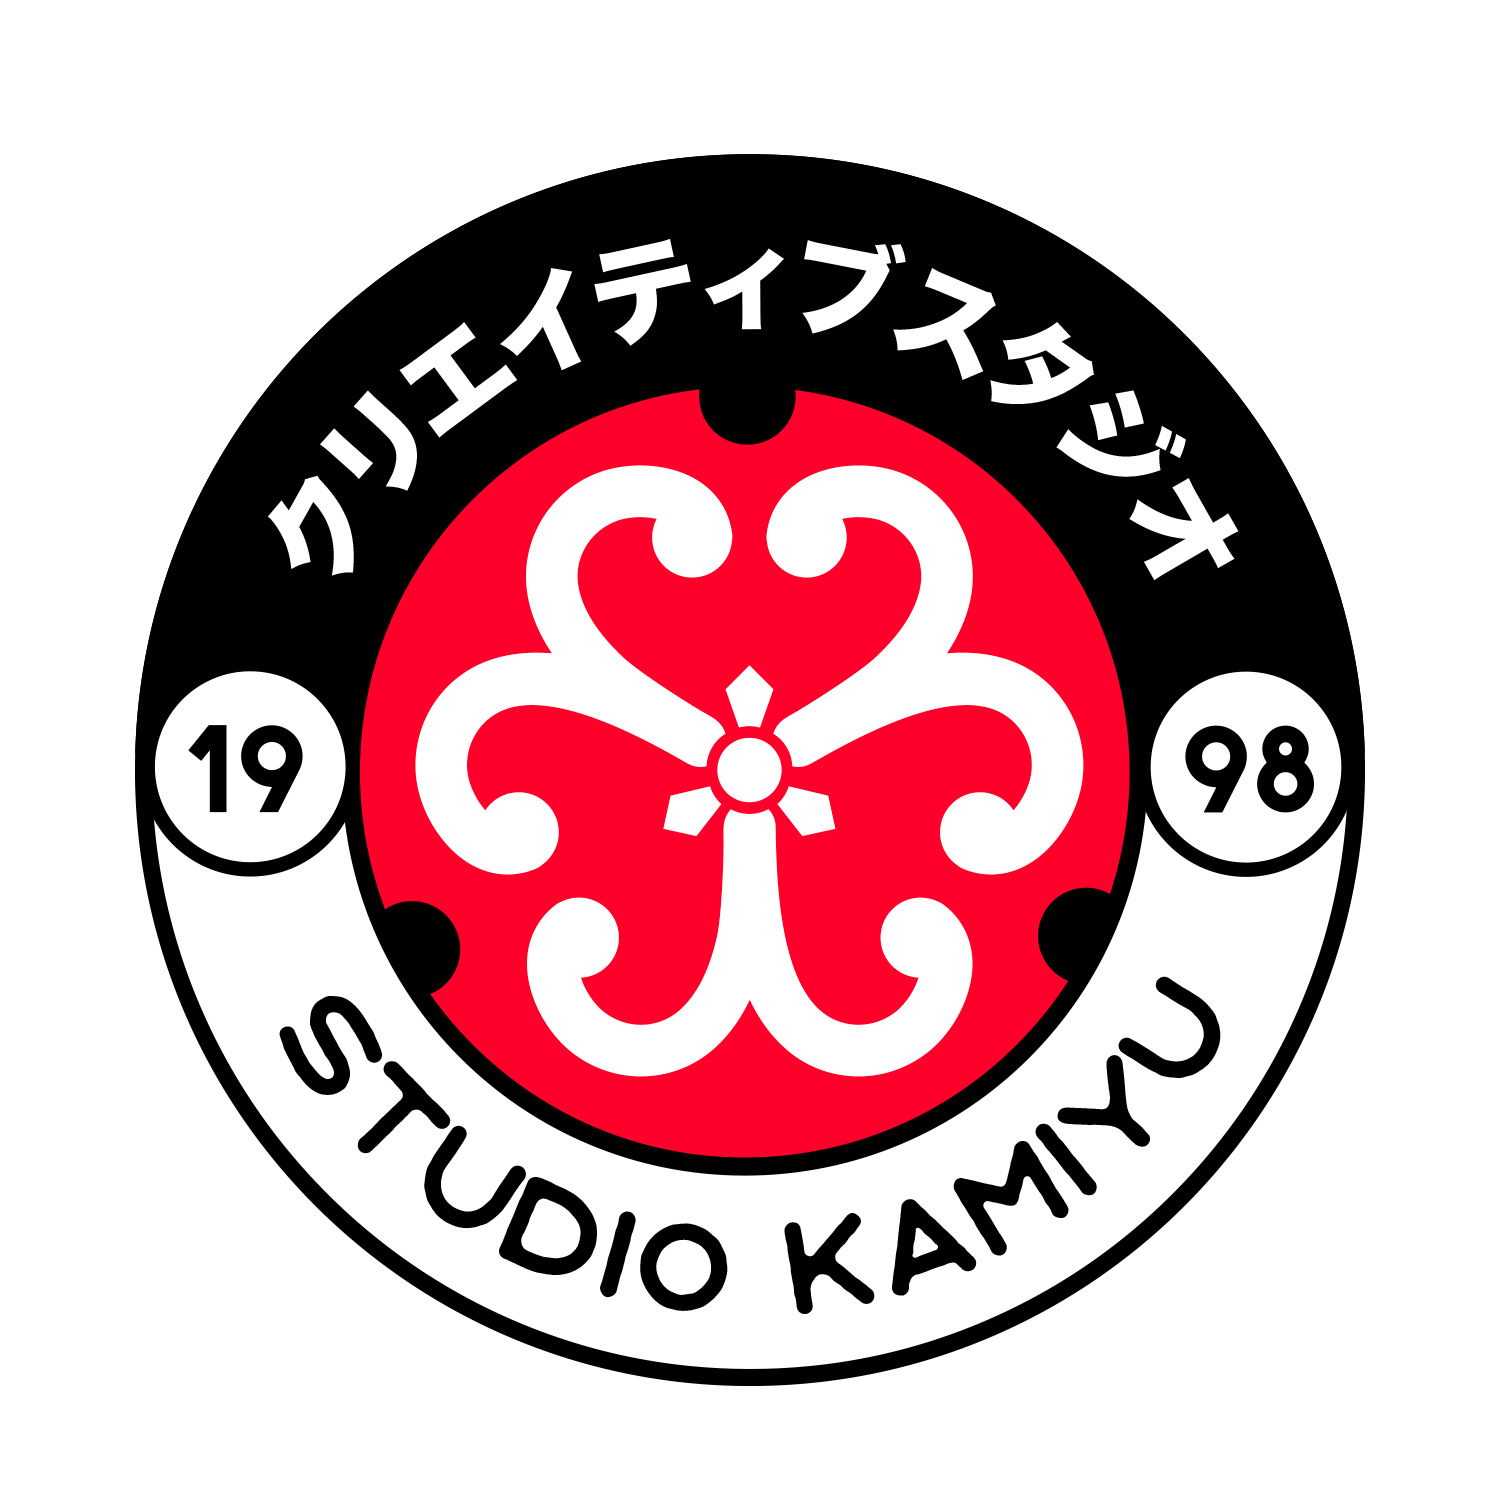 Studio Kamiyu